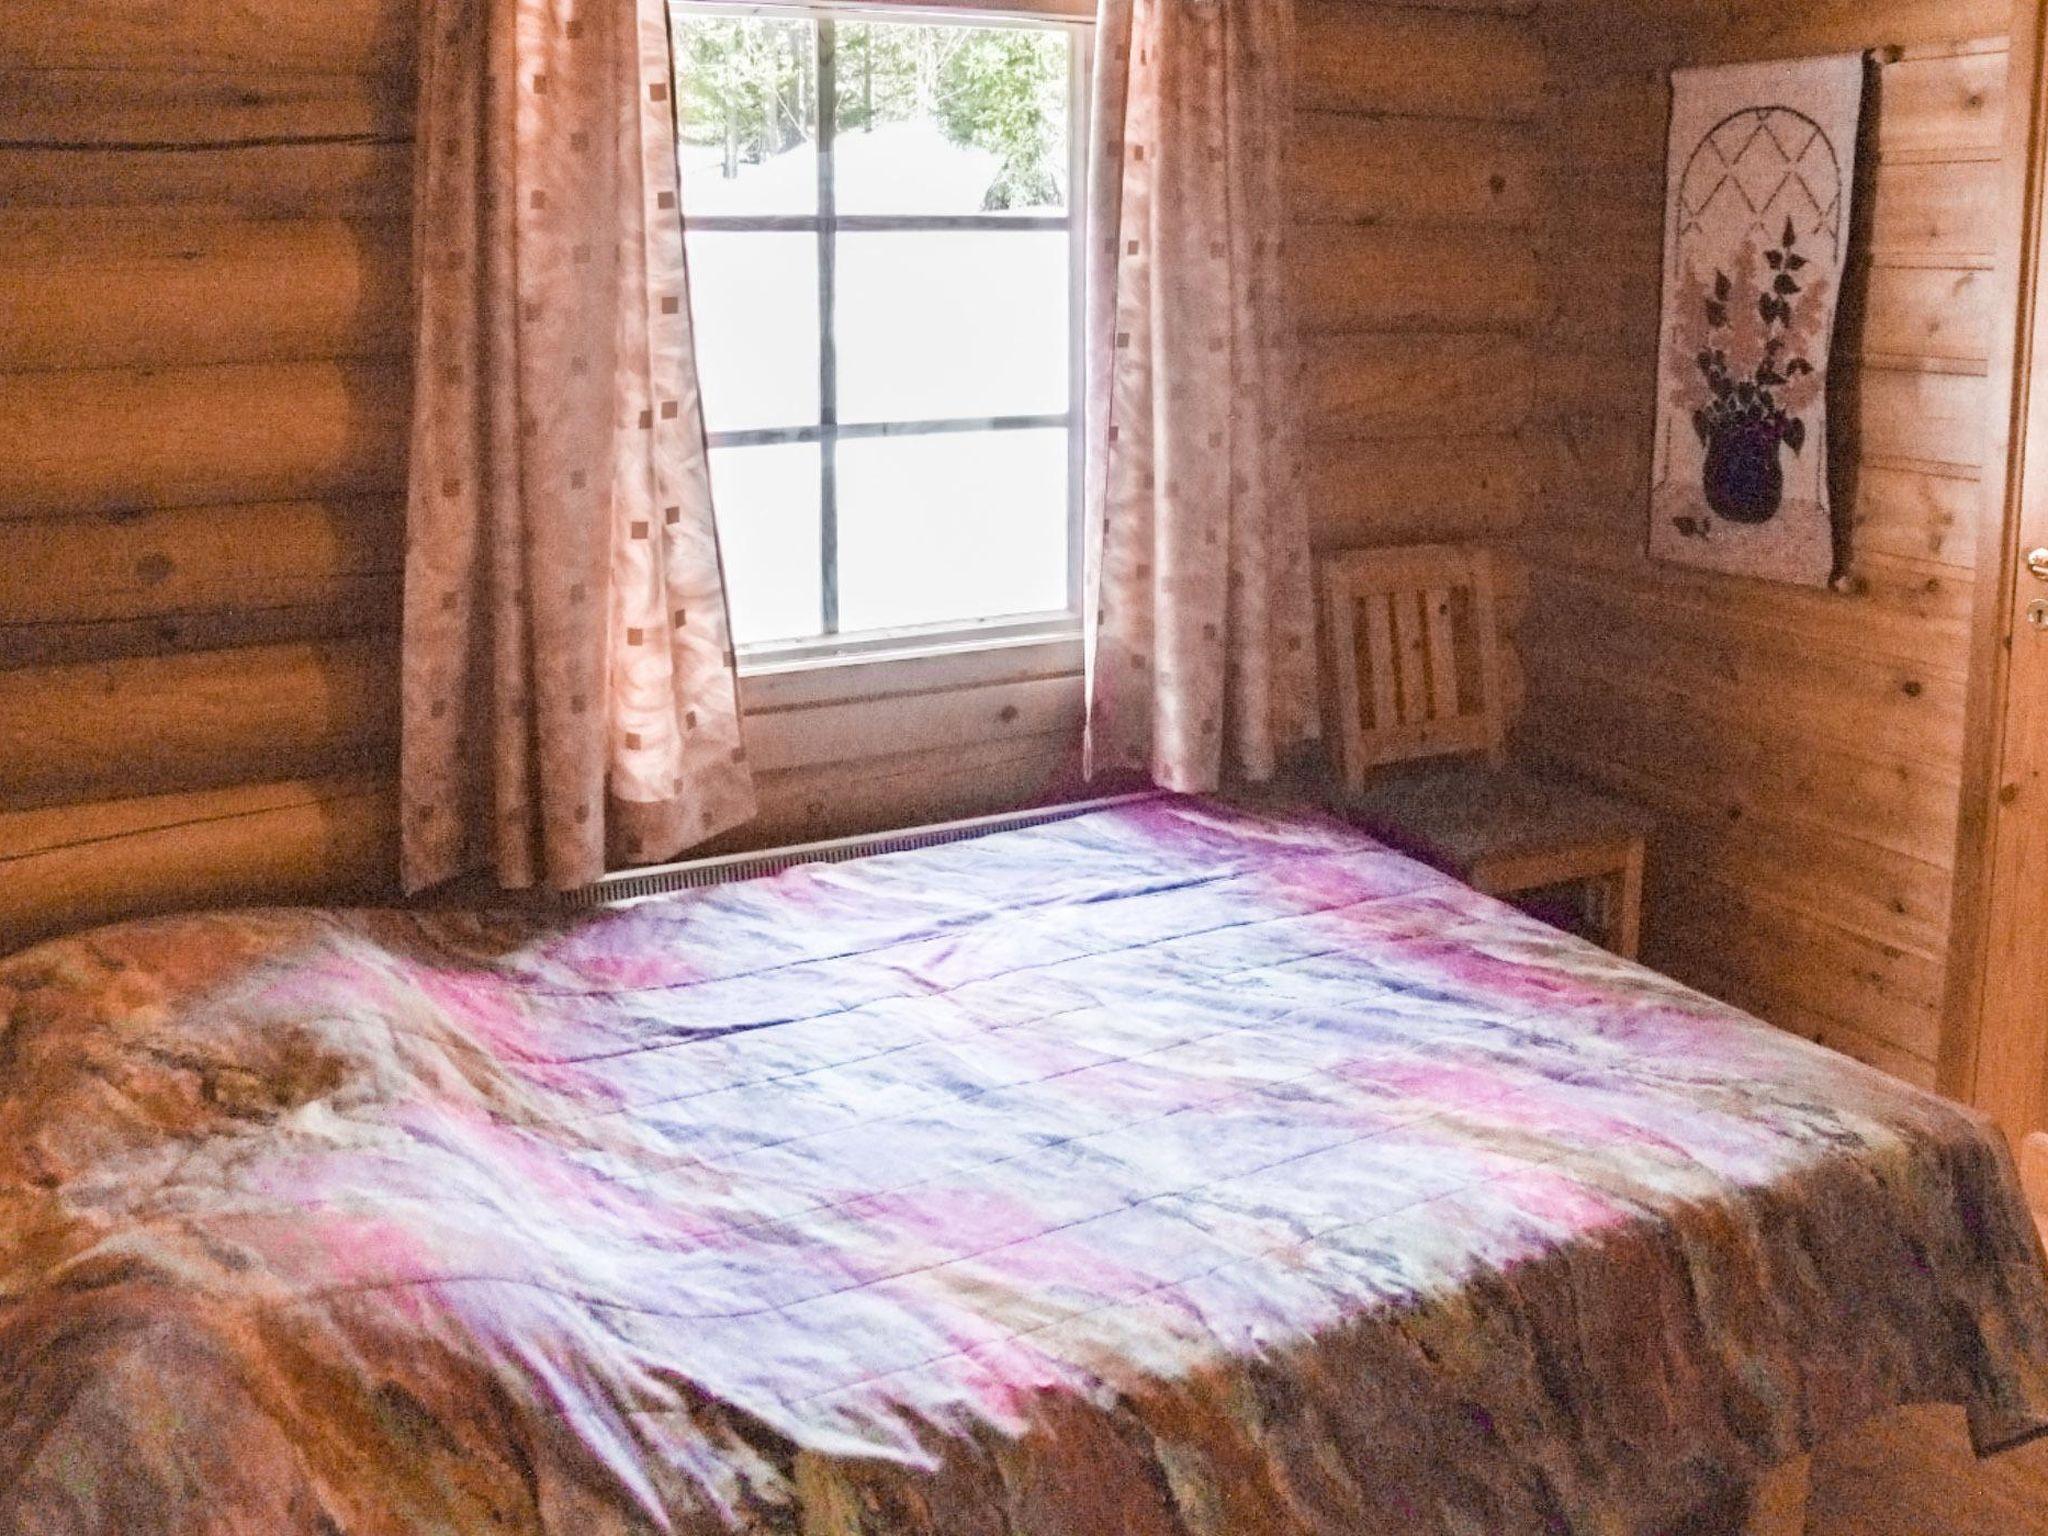 Photo 10 - 2 bedroom House in Kuusamo with sauna and mountain view